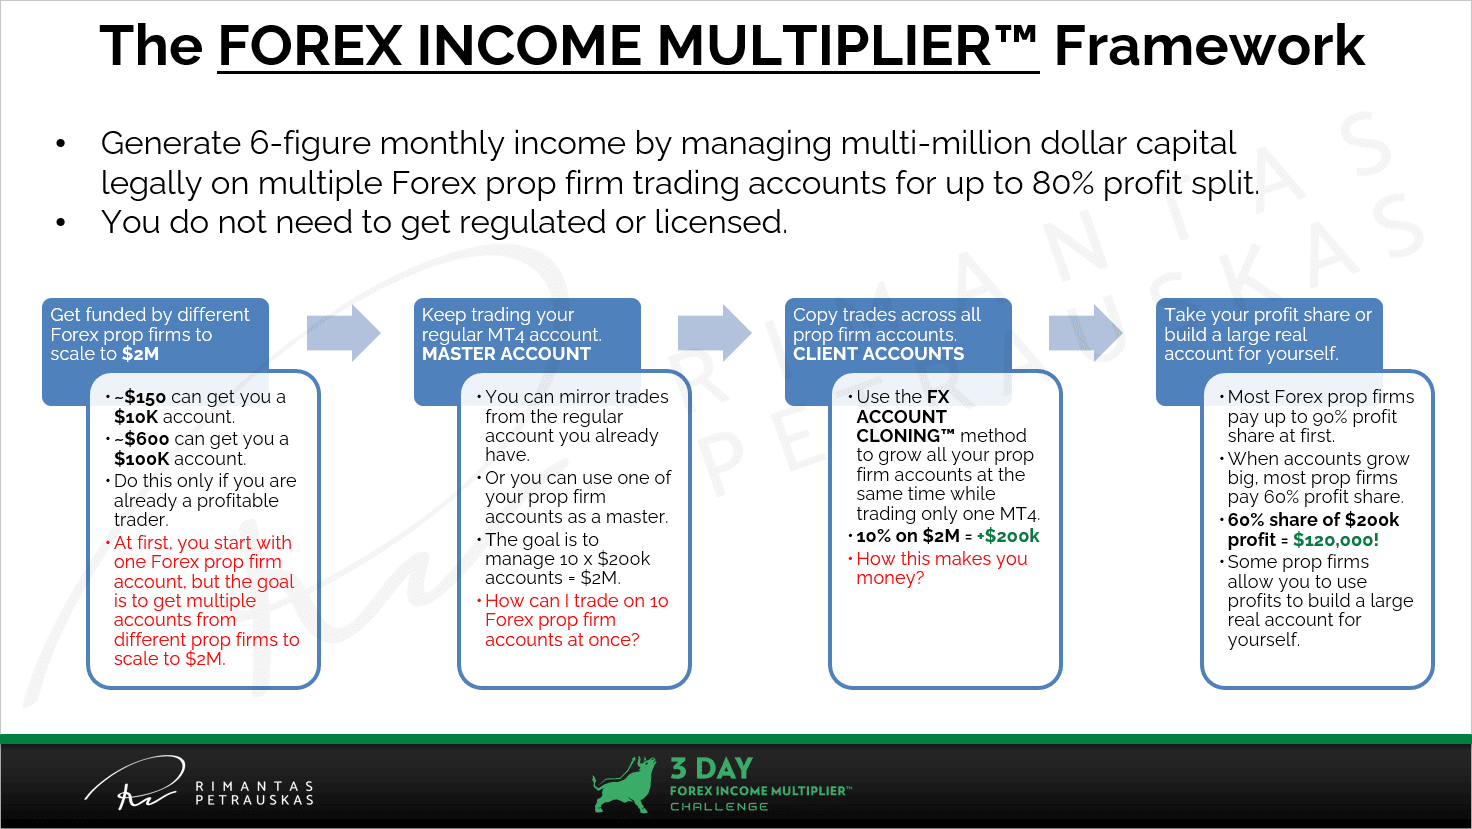 Forex Income Multiplier™ framework explainer